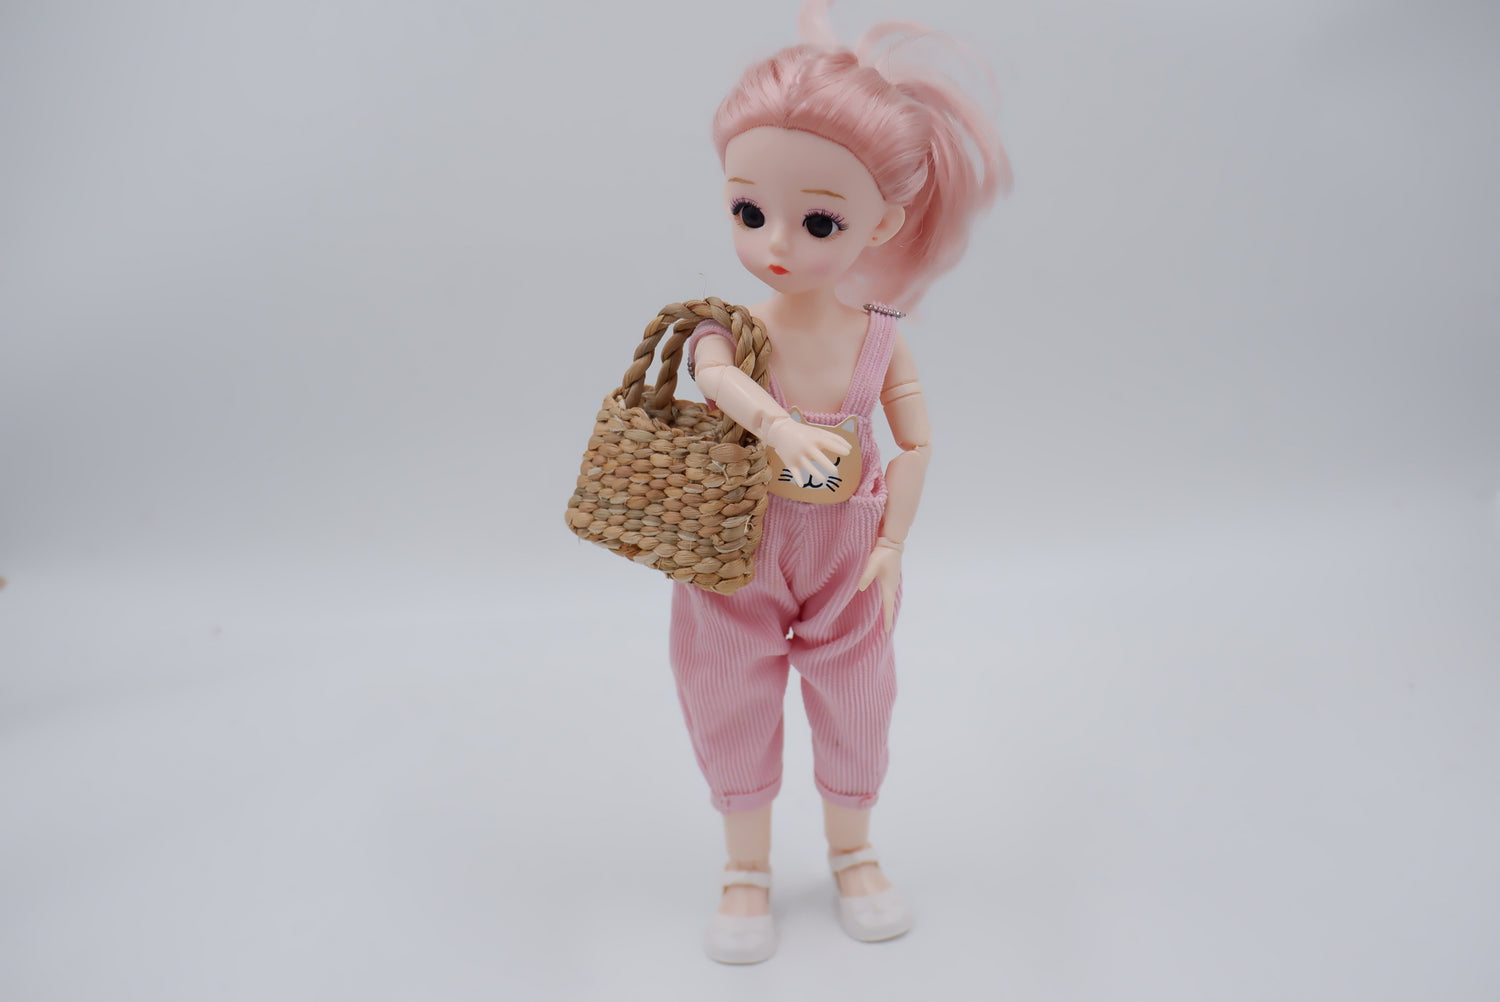 bag for doll